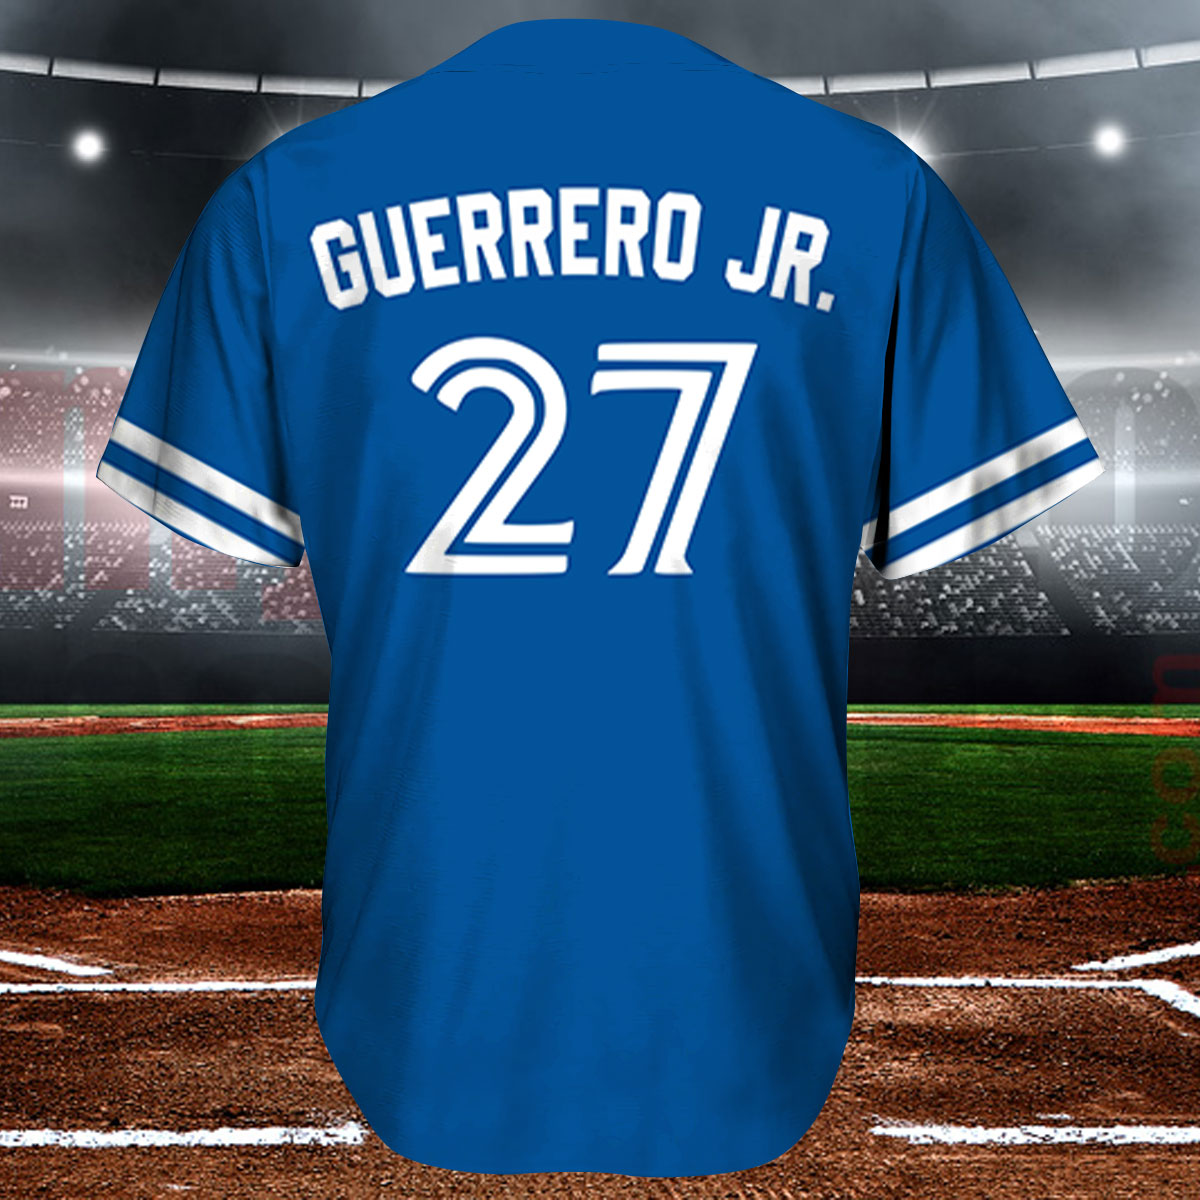 2023 Vladimir Guerrero Jr. Blue Replica Jersey Shirt Giveaways - Lelemoon